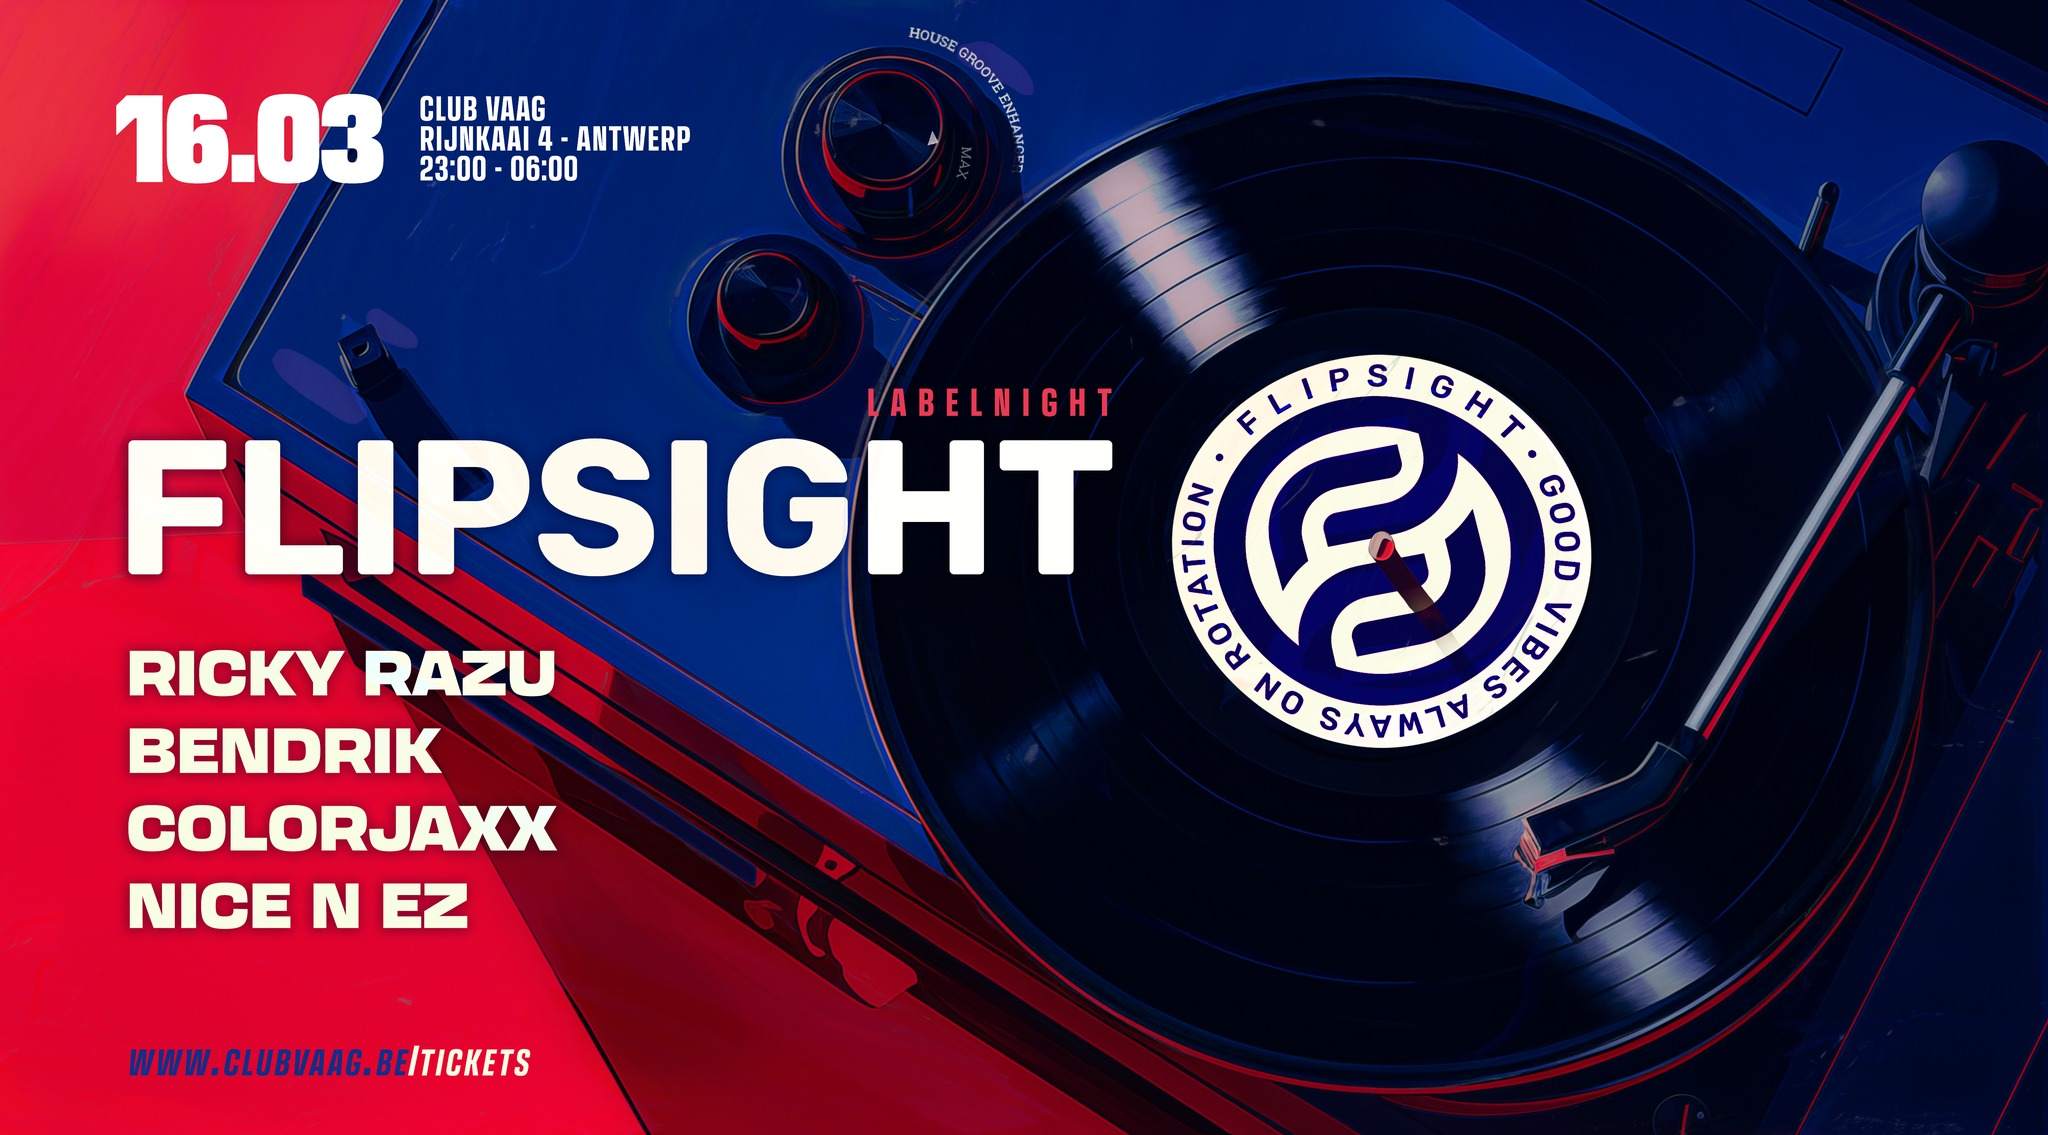 Flipsight Labelnight x Club Vaag - フライヤー表